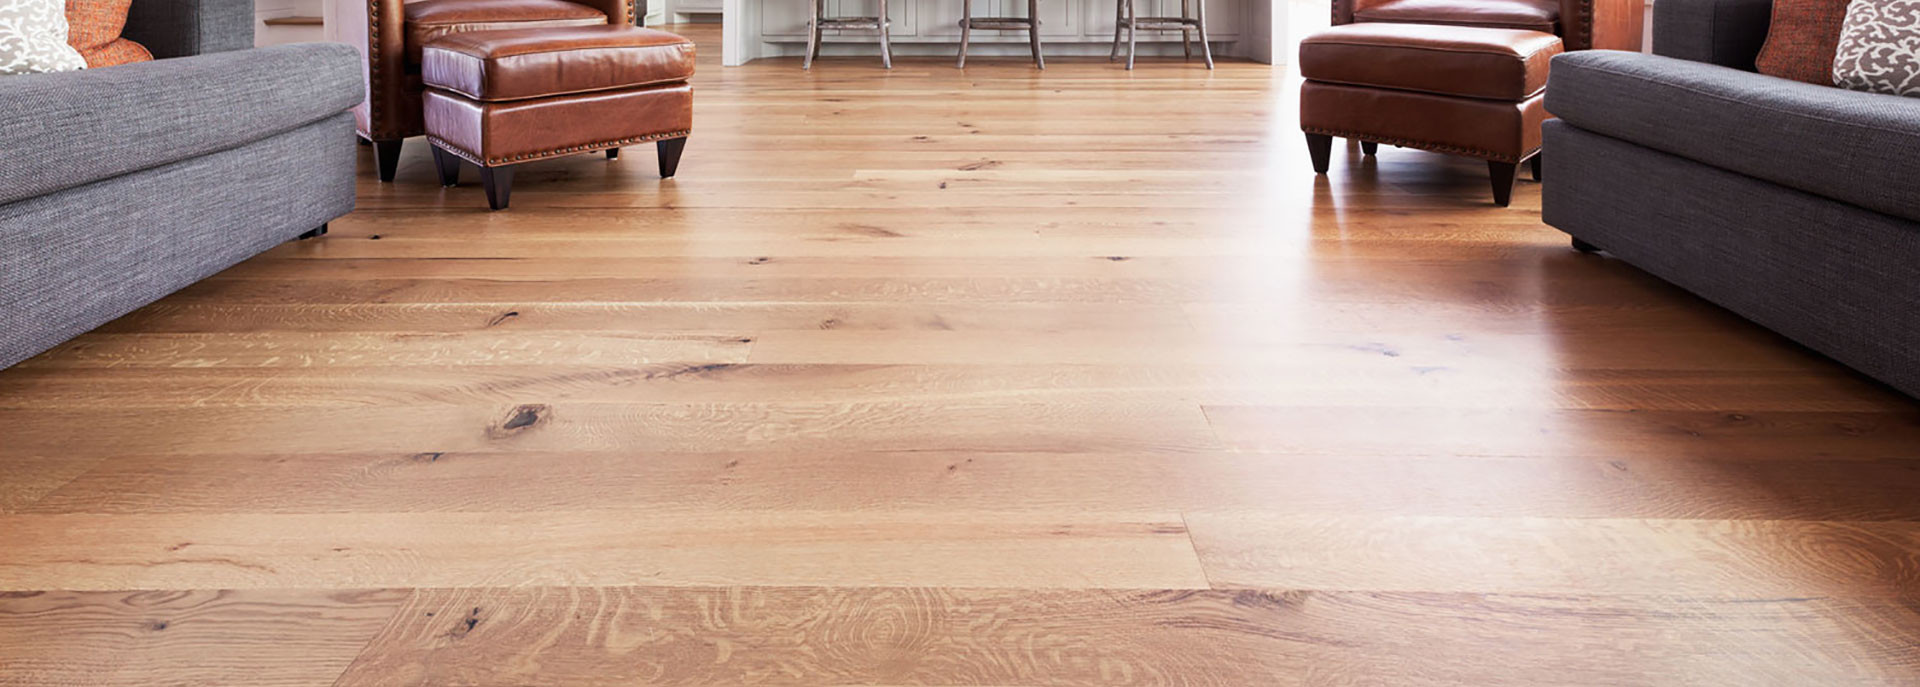 22 Trendy Hardwood Floor Refinishing Quincy Ma Unique Flooring Ideas